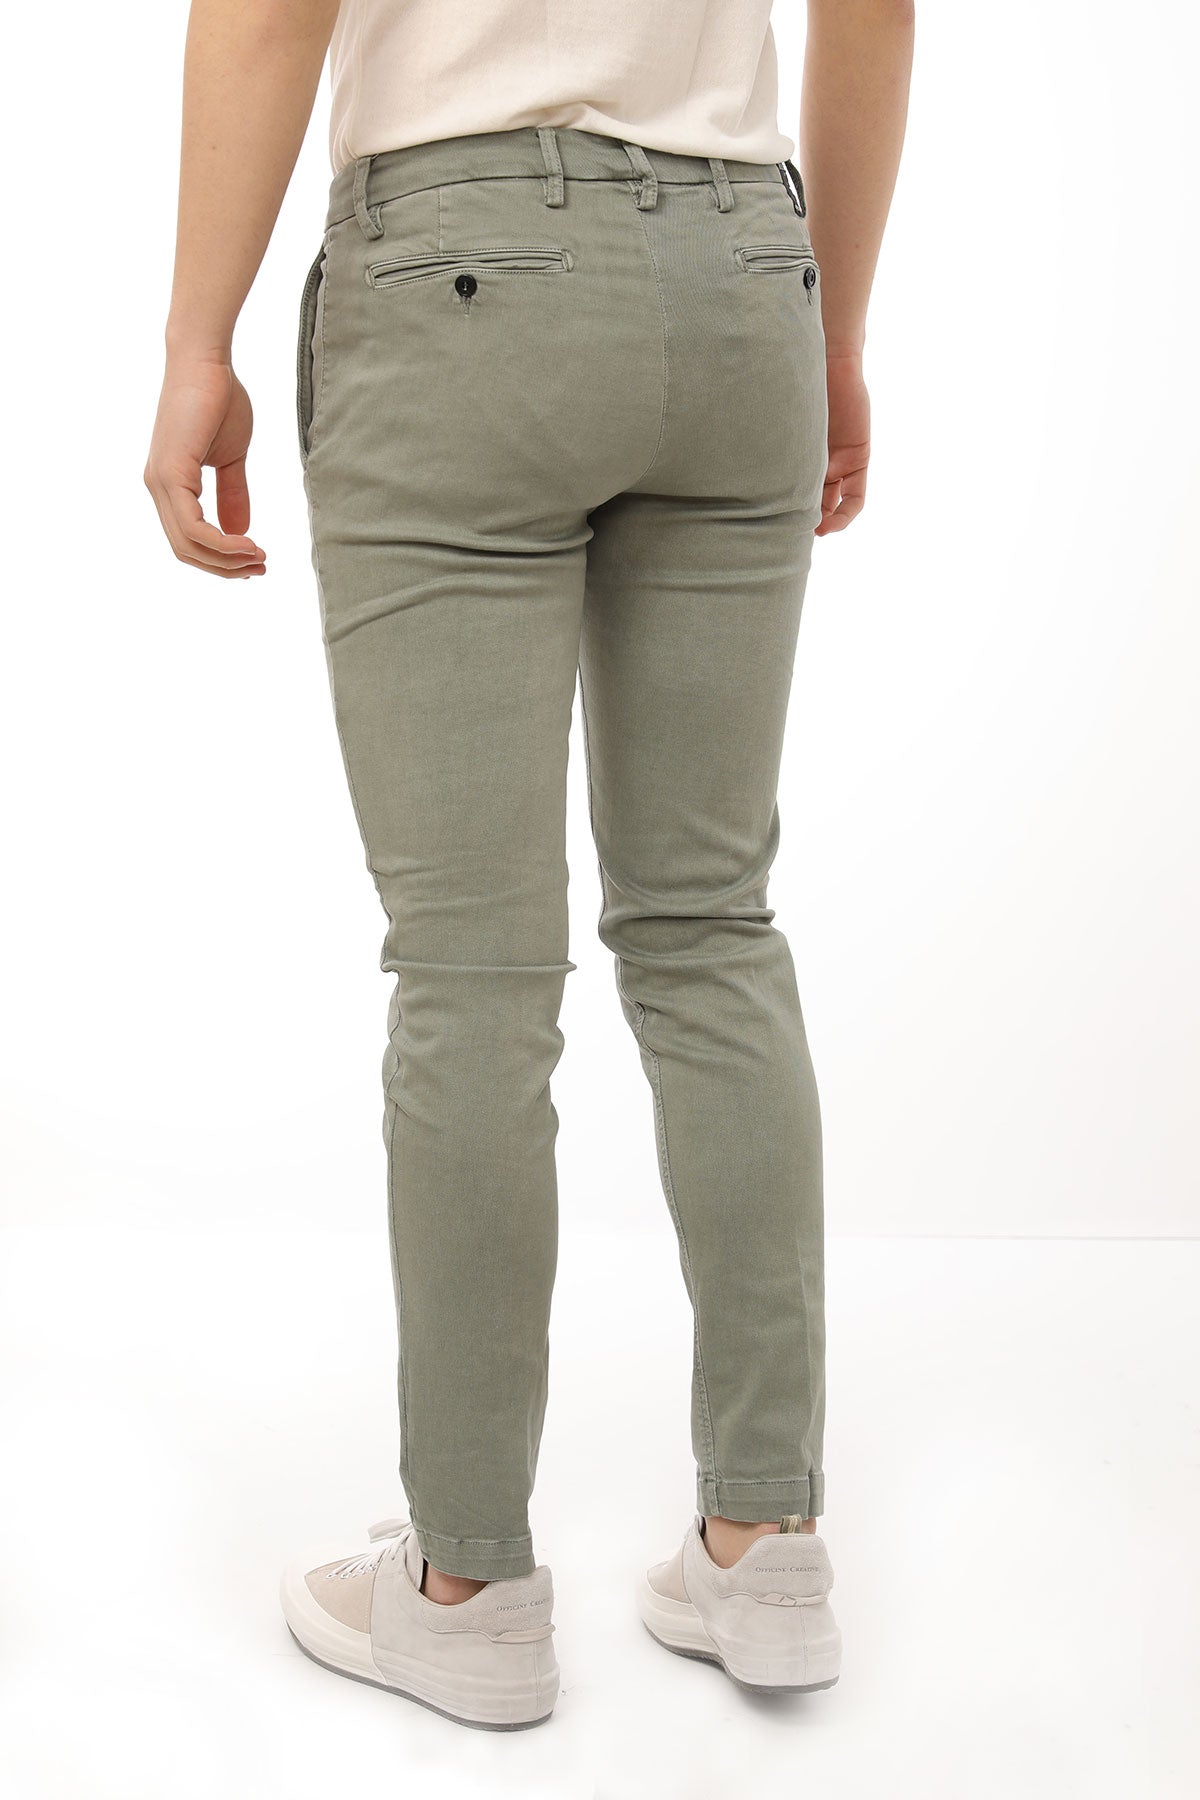 Replay Hyperflex Zeumar Slim Fit Jeans-Libas Trendy Fashion Store